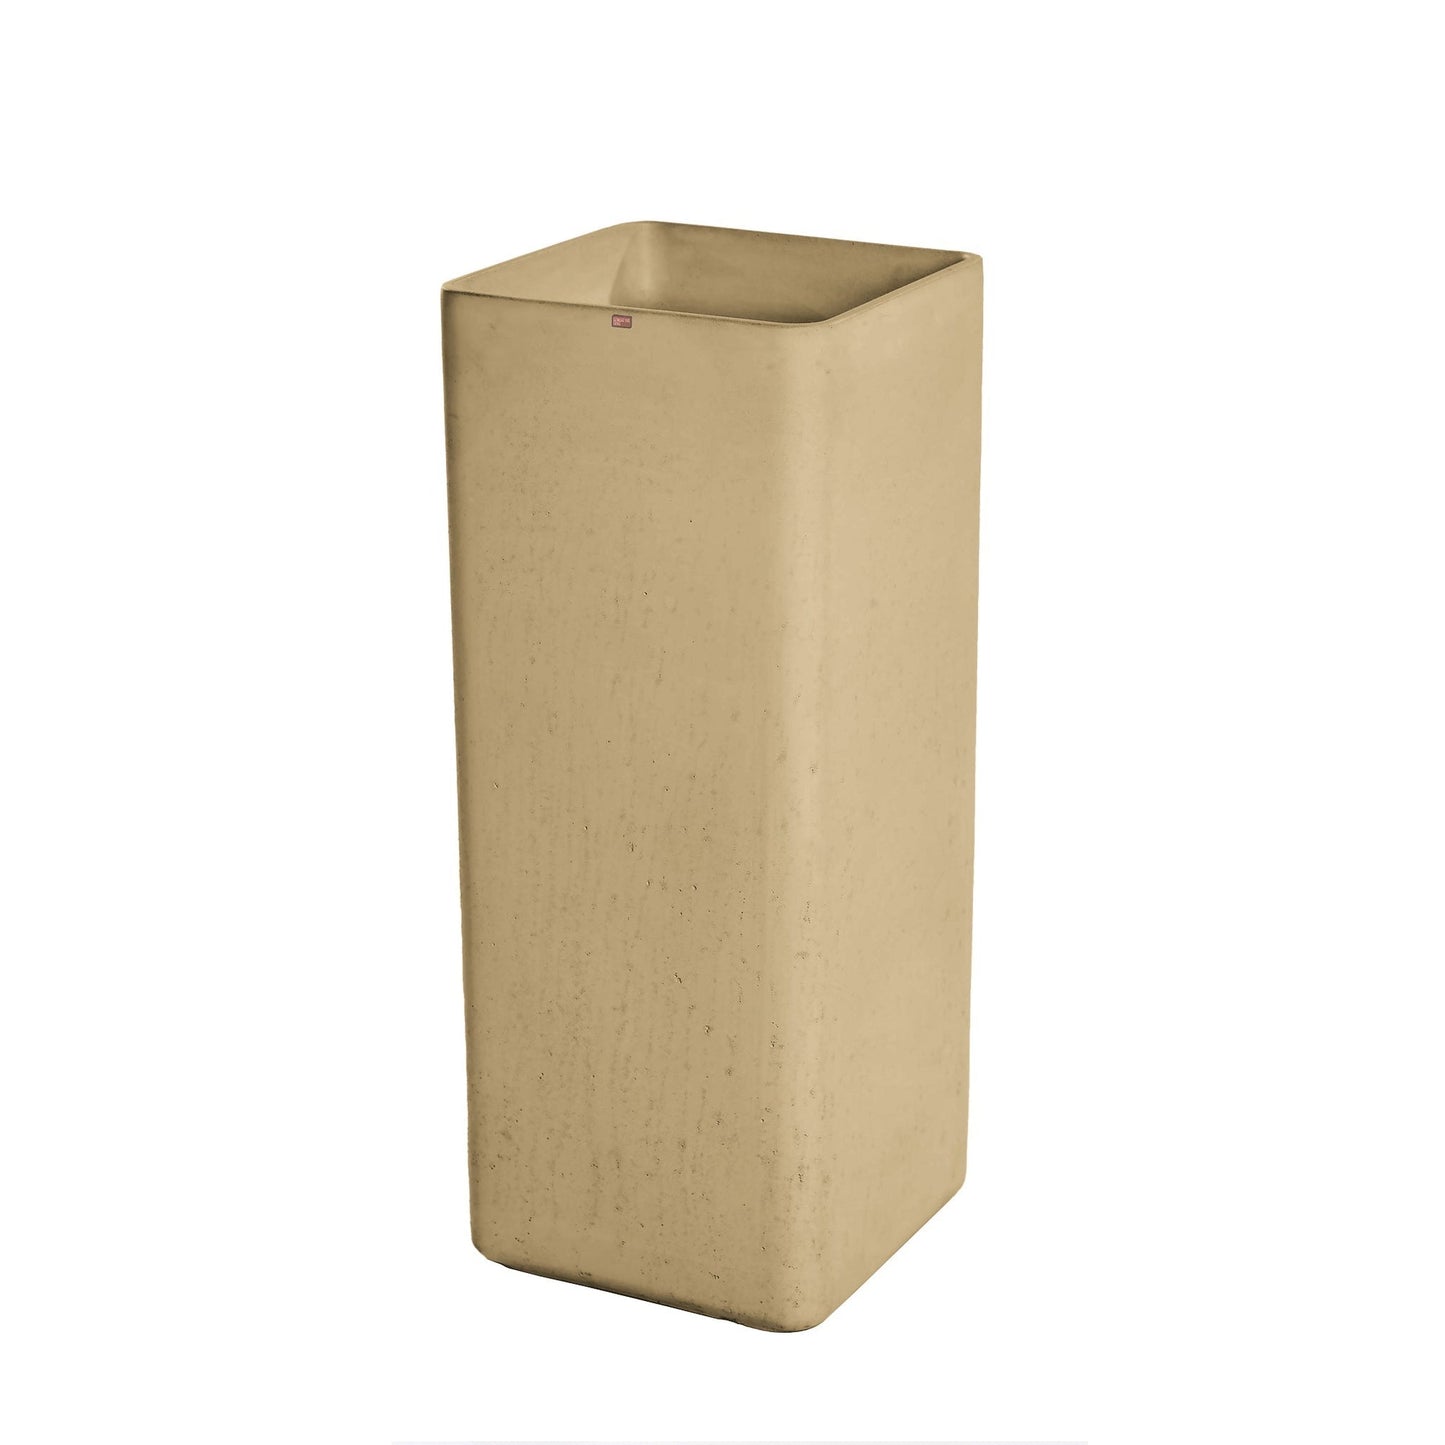 Konkretus Fladd06 15" Desert Brown Square Pedestal Concrete Bathroom Sink